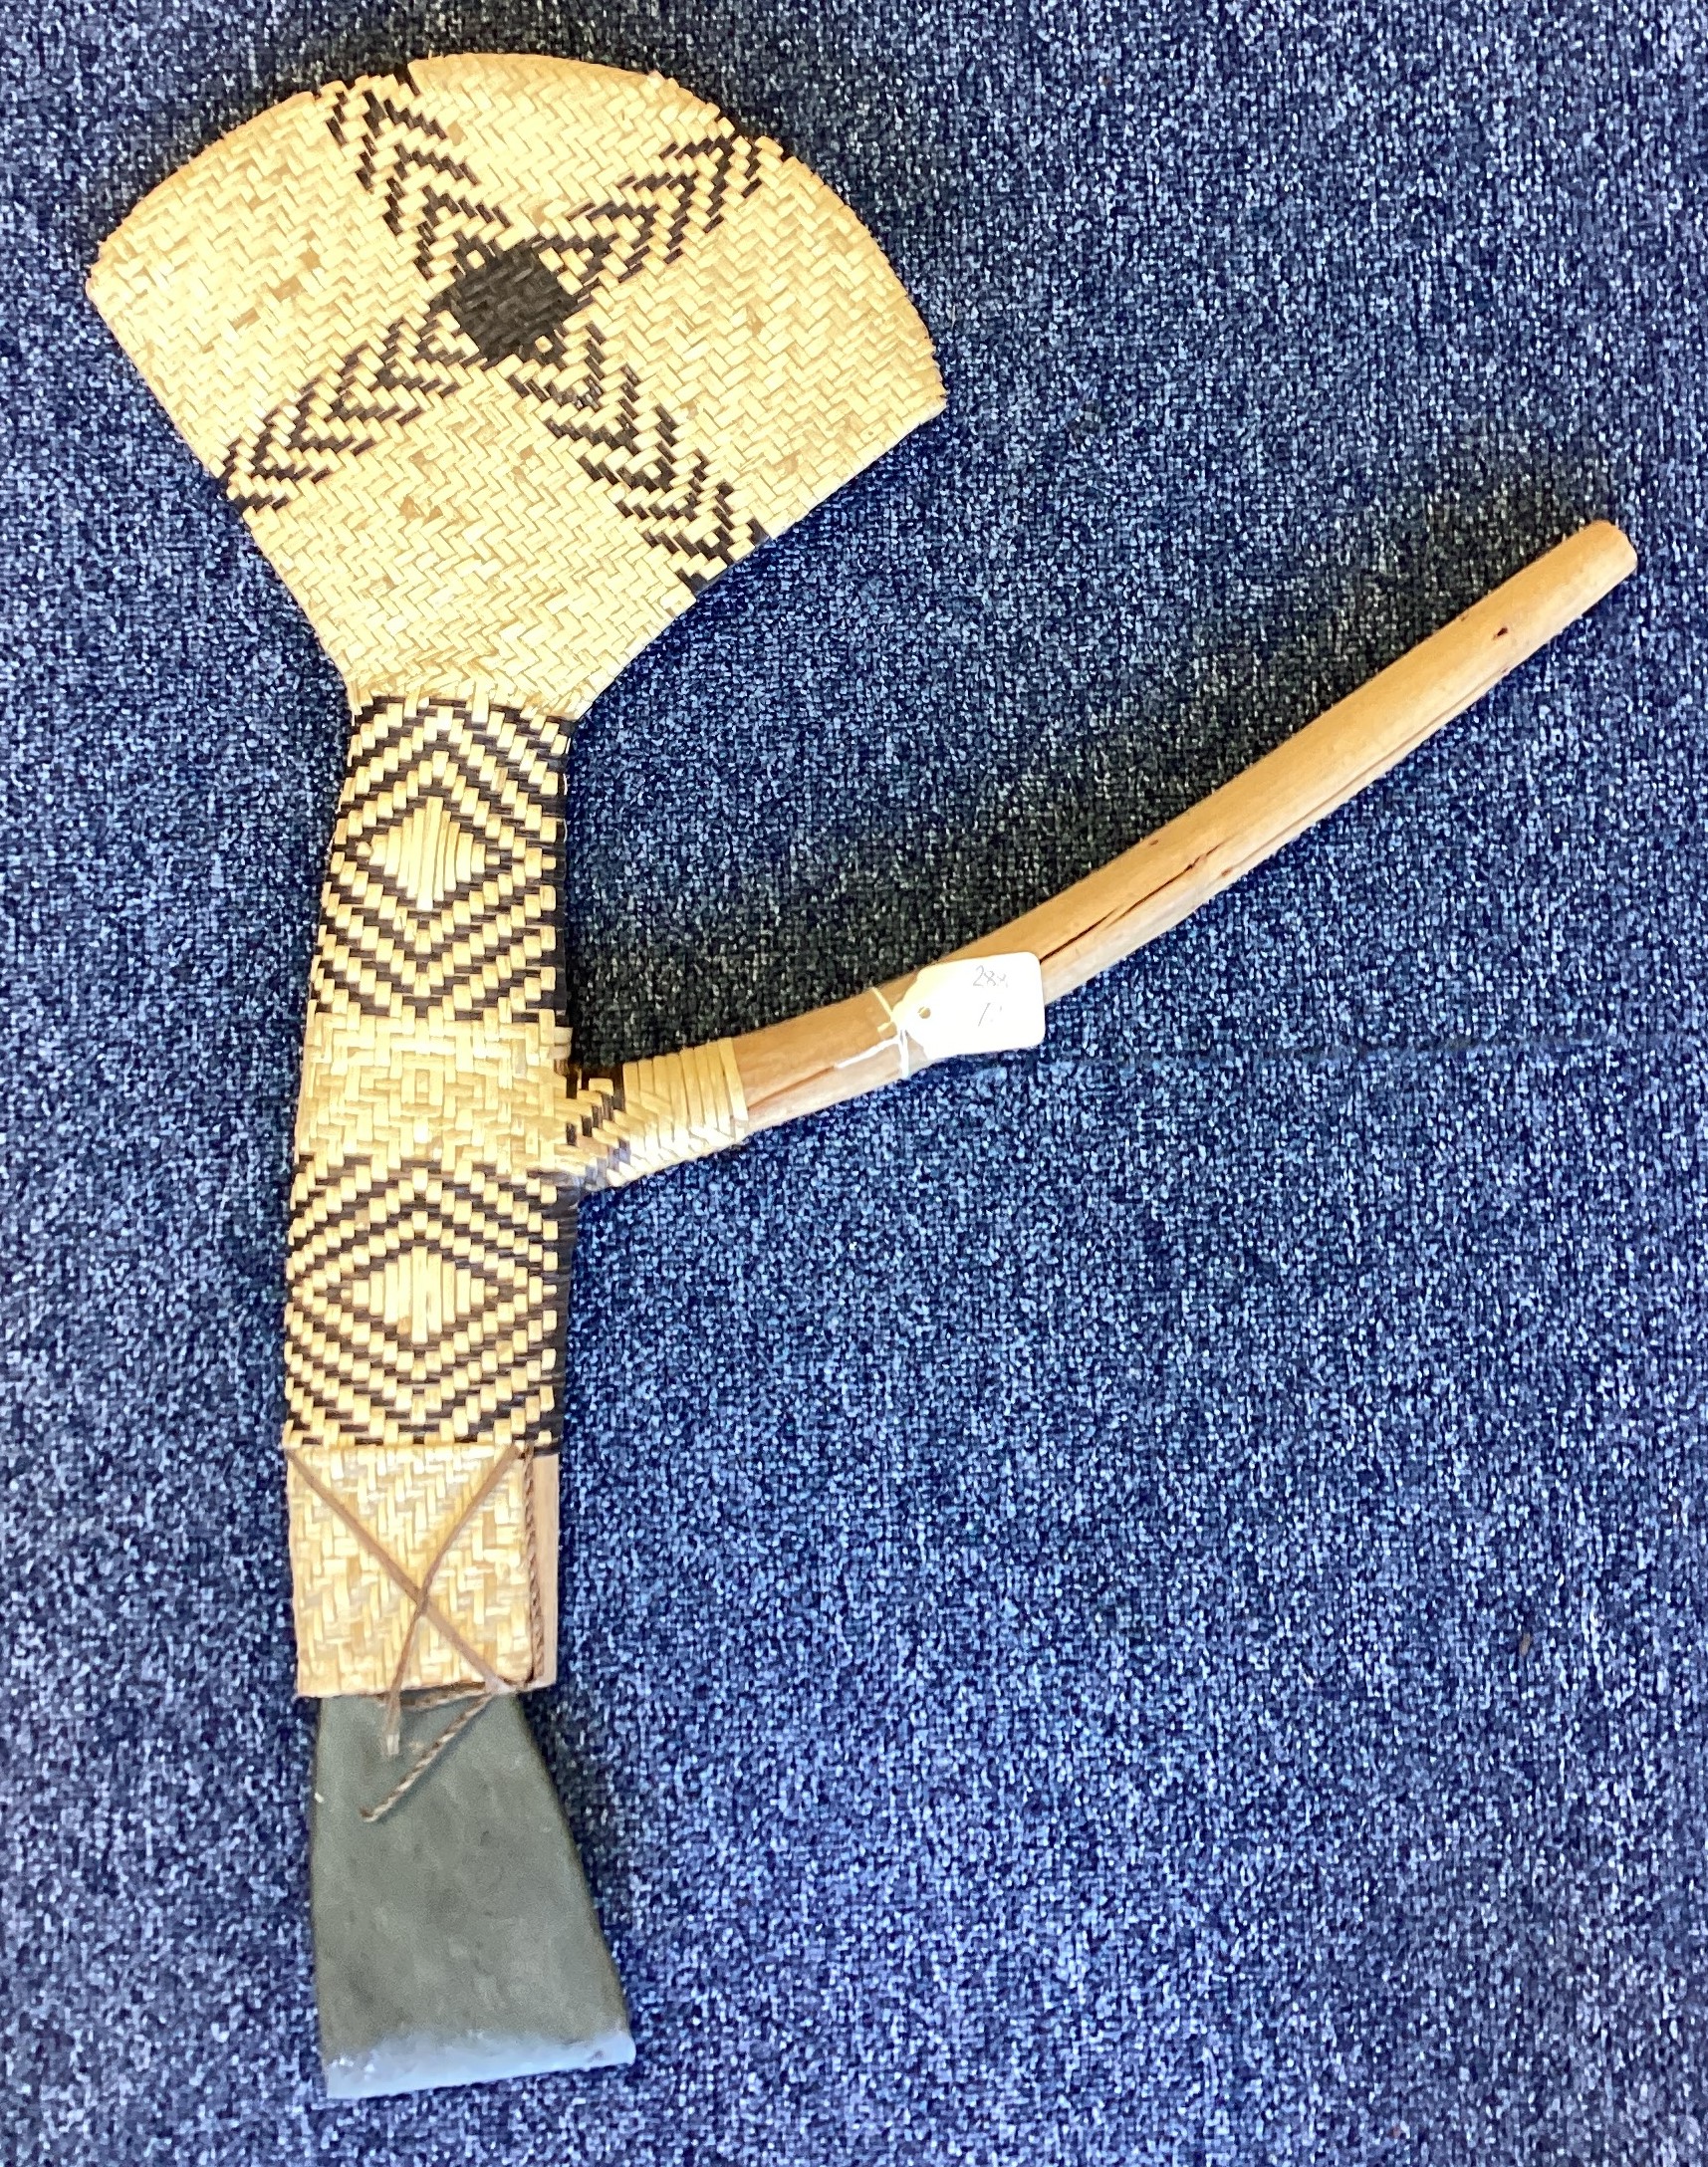 An unusual Papua New Guinea axe.